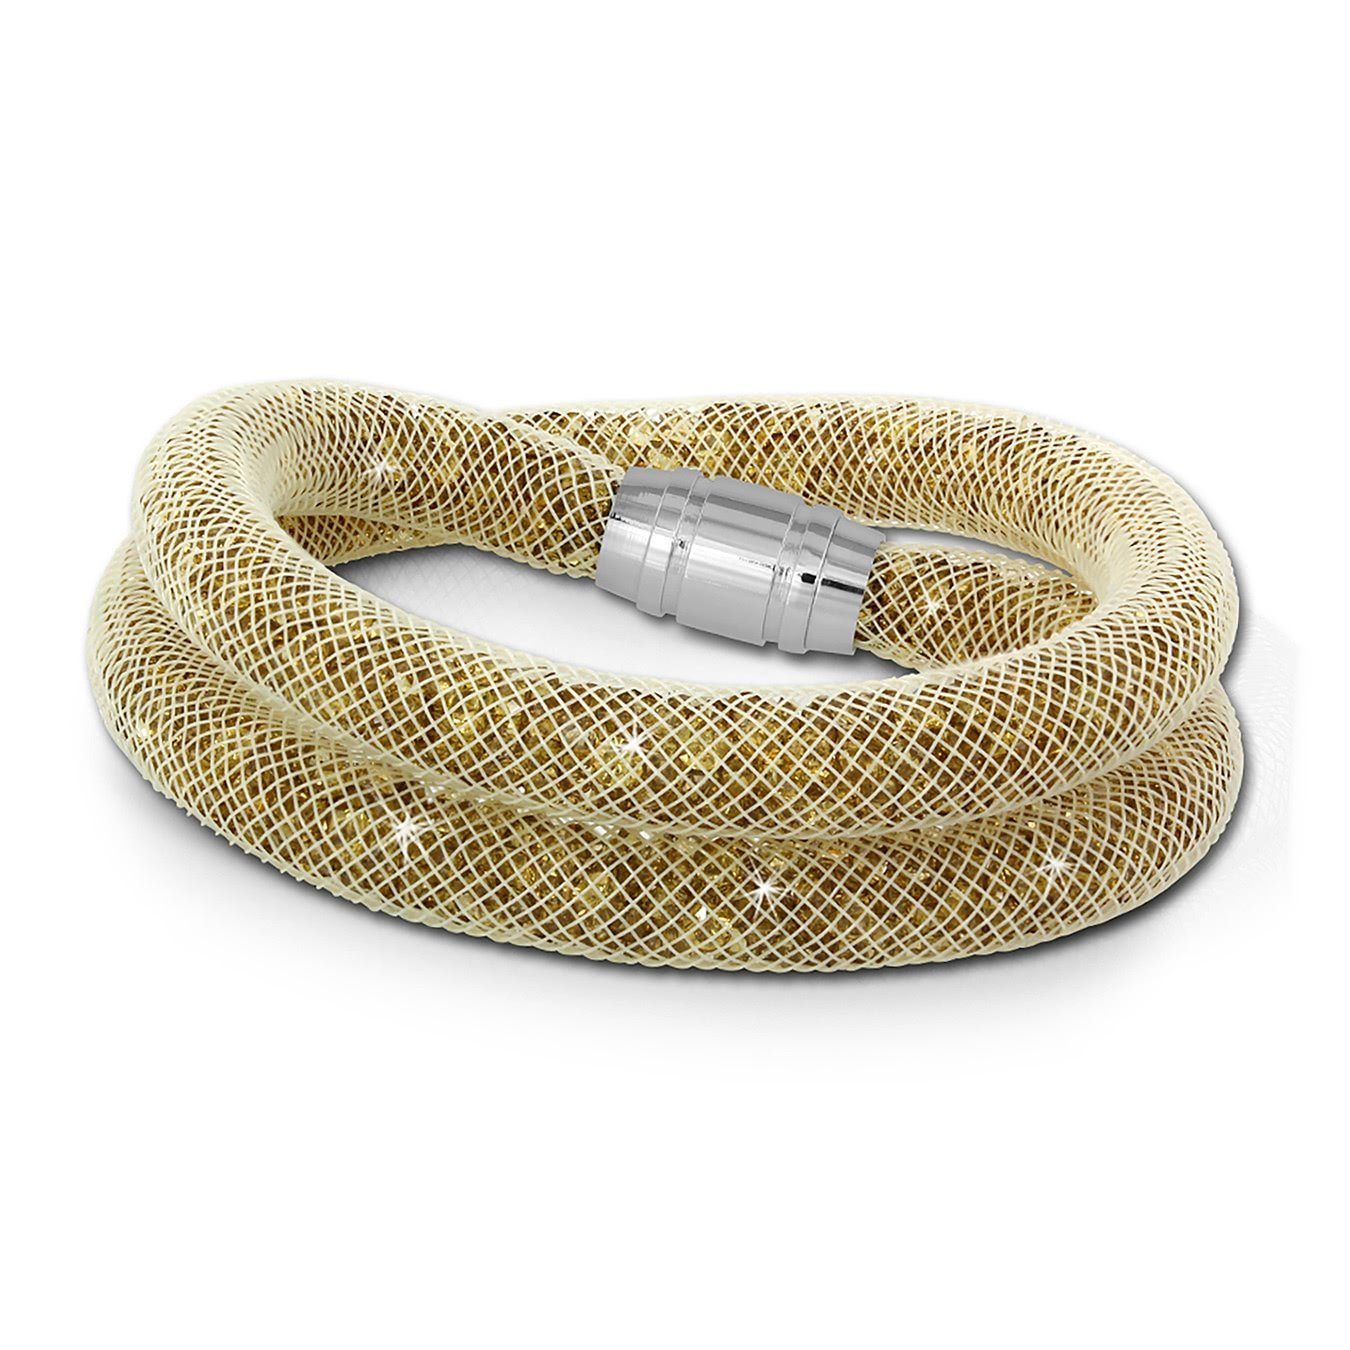 SilberDream Edelstahlarmband SilberDream Armband gold Arm-Schmuck (Armband), Damenarmband mit Edelstahl-Verschluss, Farbe: goldfarbene Kristalle